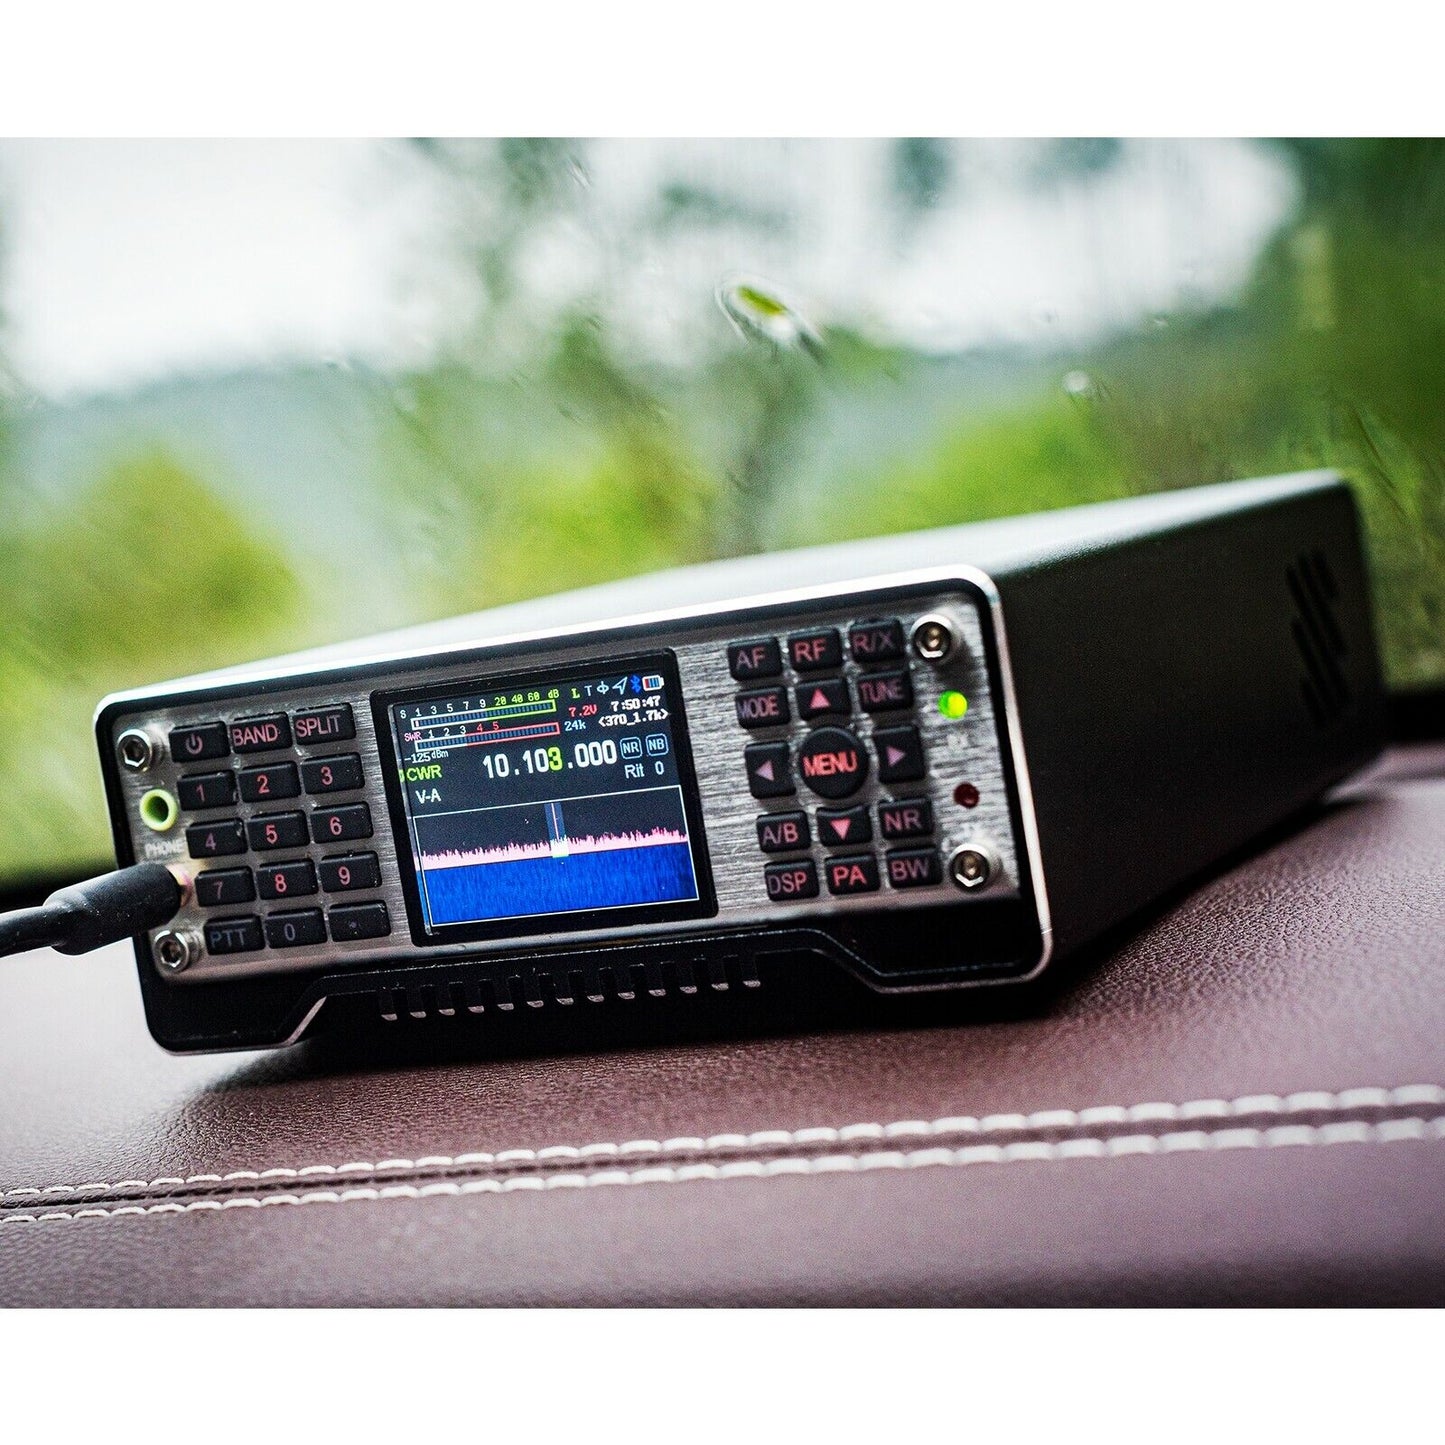 Q900 HF-UHF All Mode Mobile Radio